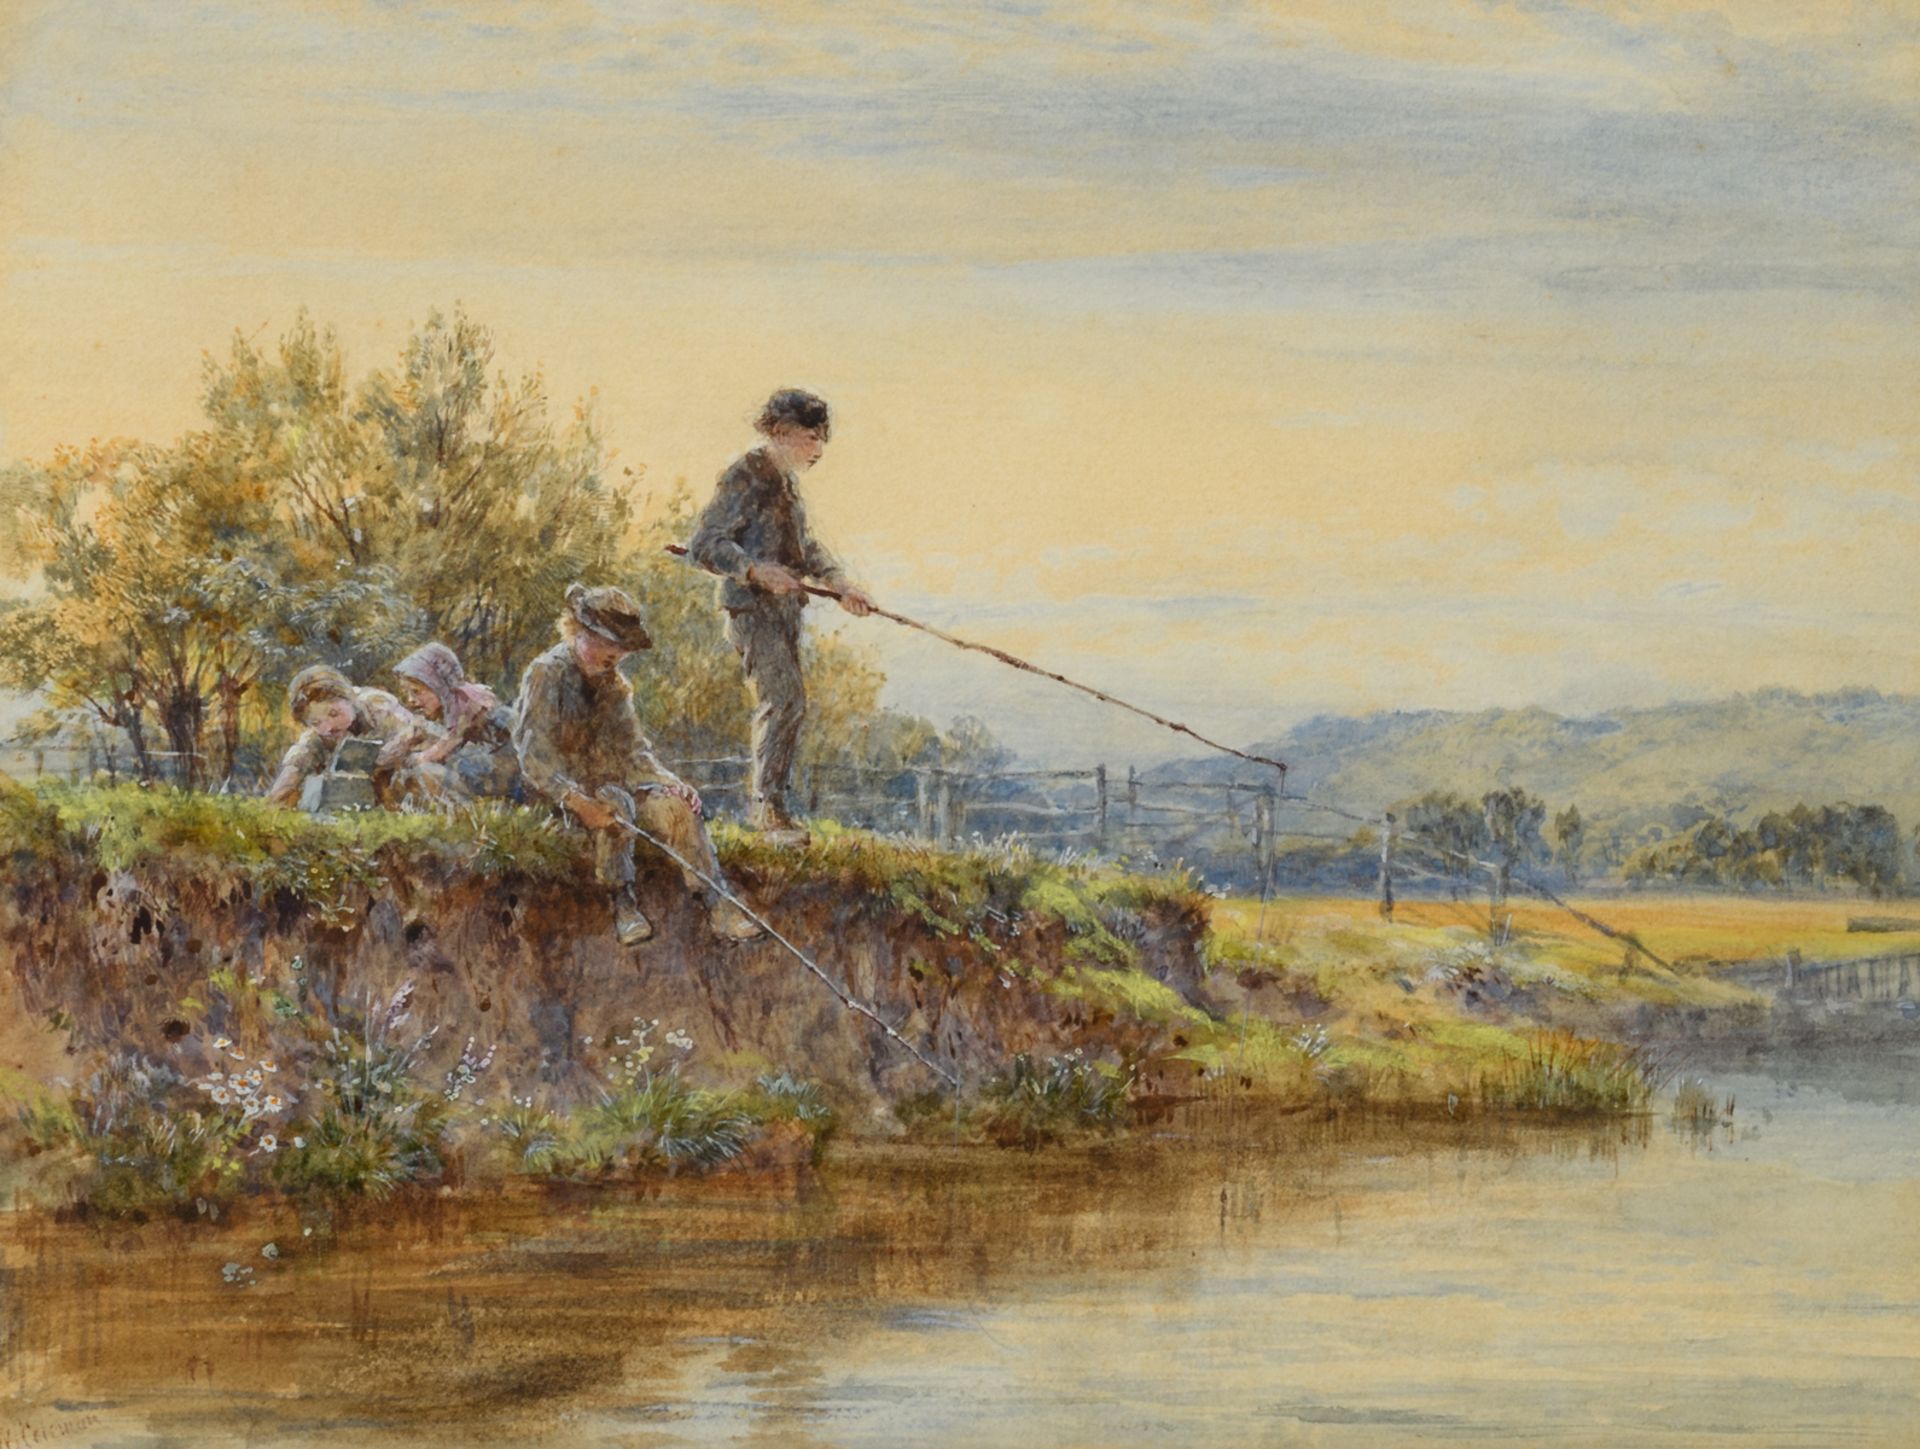 Coleman W. St., 'Children fishing at a River Bank', watercolour, 19 x 25 cm